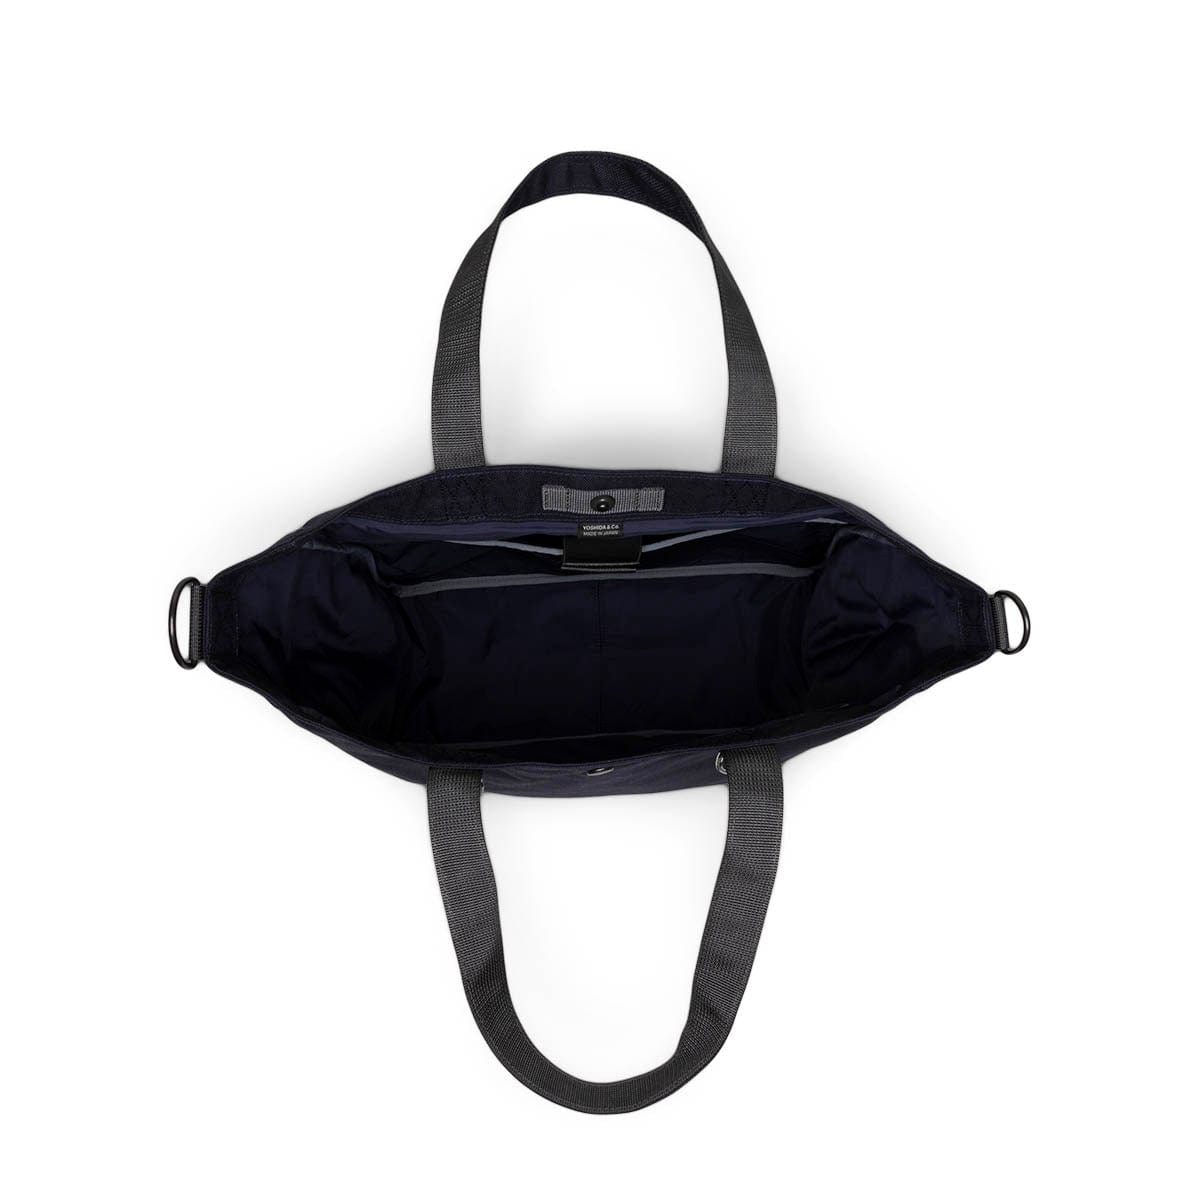 Porter Yoshida Bags NAVY X BLACK / O/S HYPE 2WAY TOTE BAG